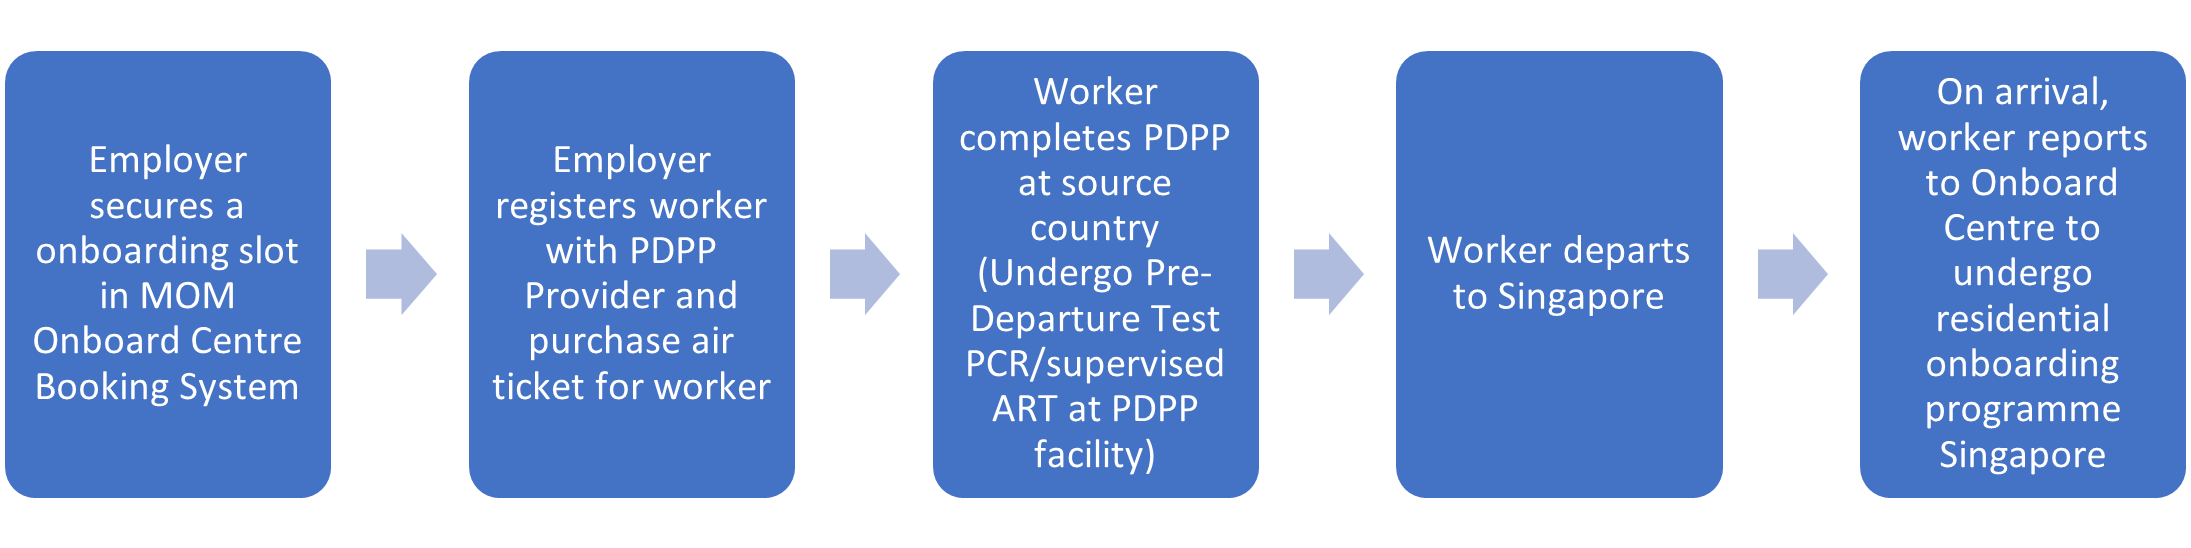 pdpp workflow2